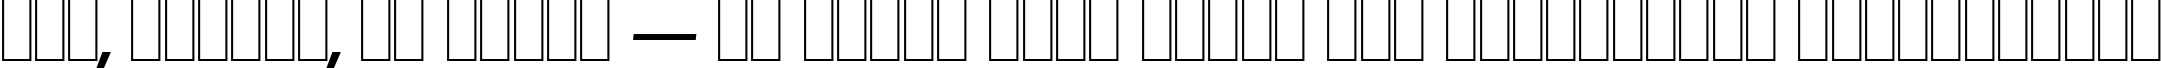 Пример написания шрифтом OnStageSerial-Medium-Italic текста на украинском